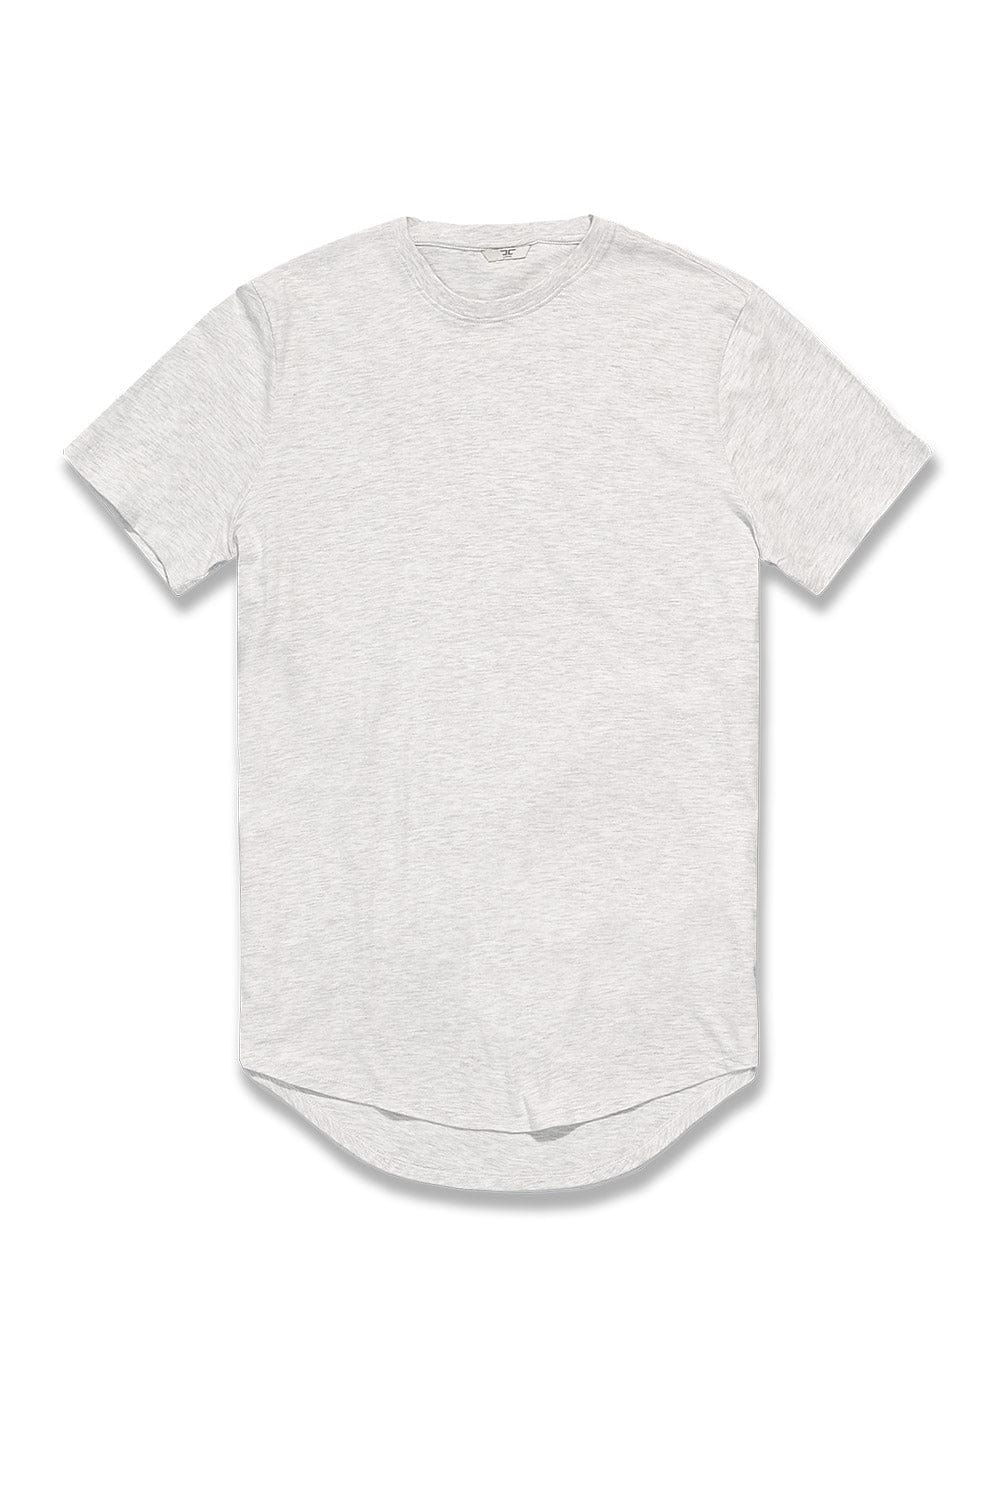 Jordan Craig Scallop T-Shirt (Athletic Fit) White Silver / S